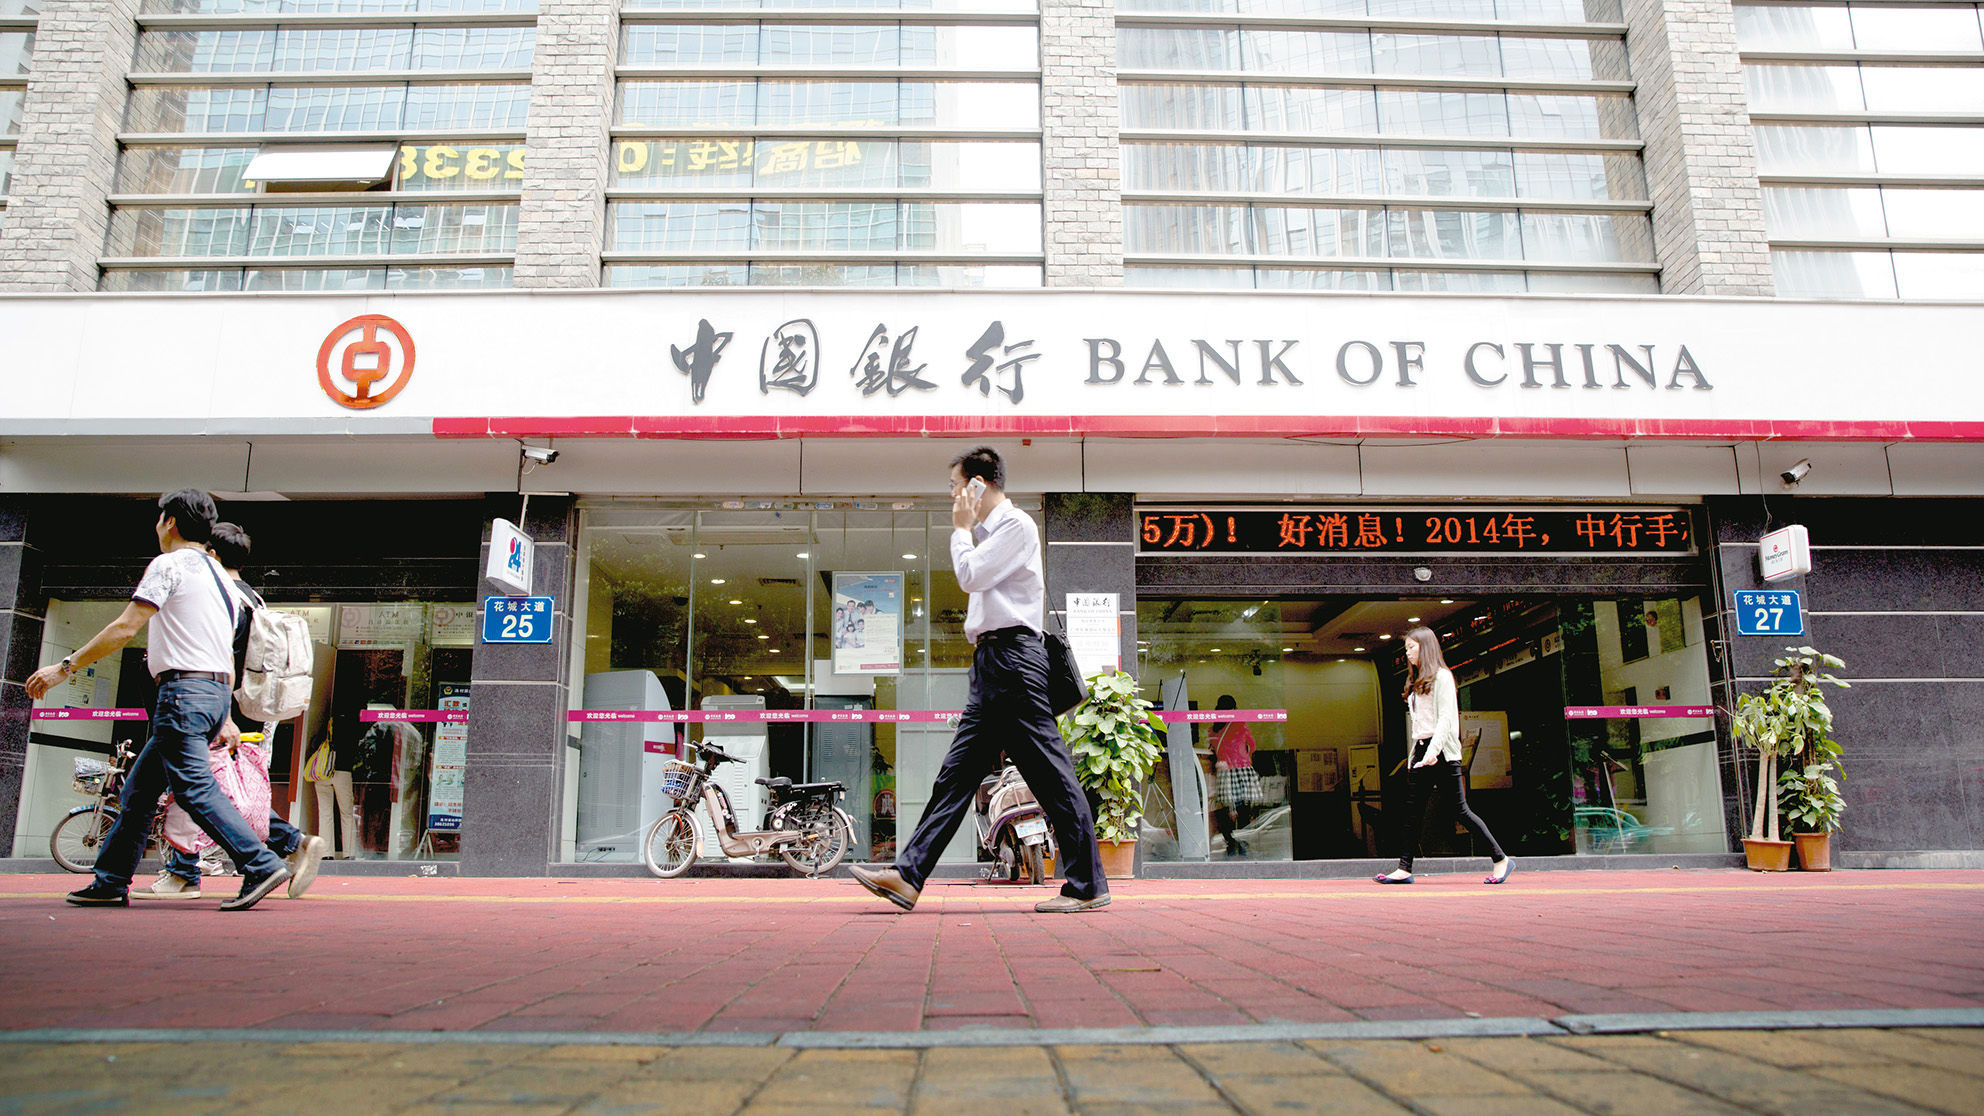 Cnaps bank of china. Банк Китая. Банк Bank of China. Банк Китая в Москве. Банк Китая элос.